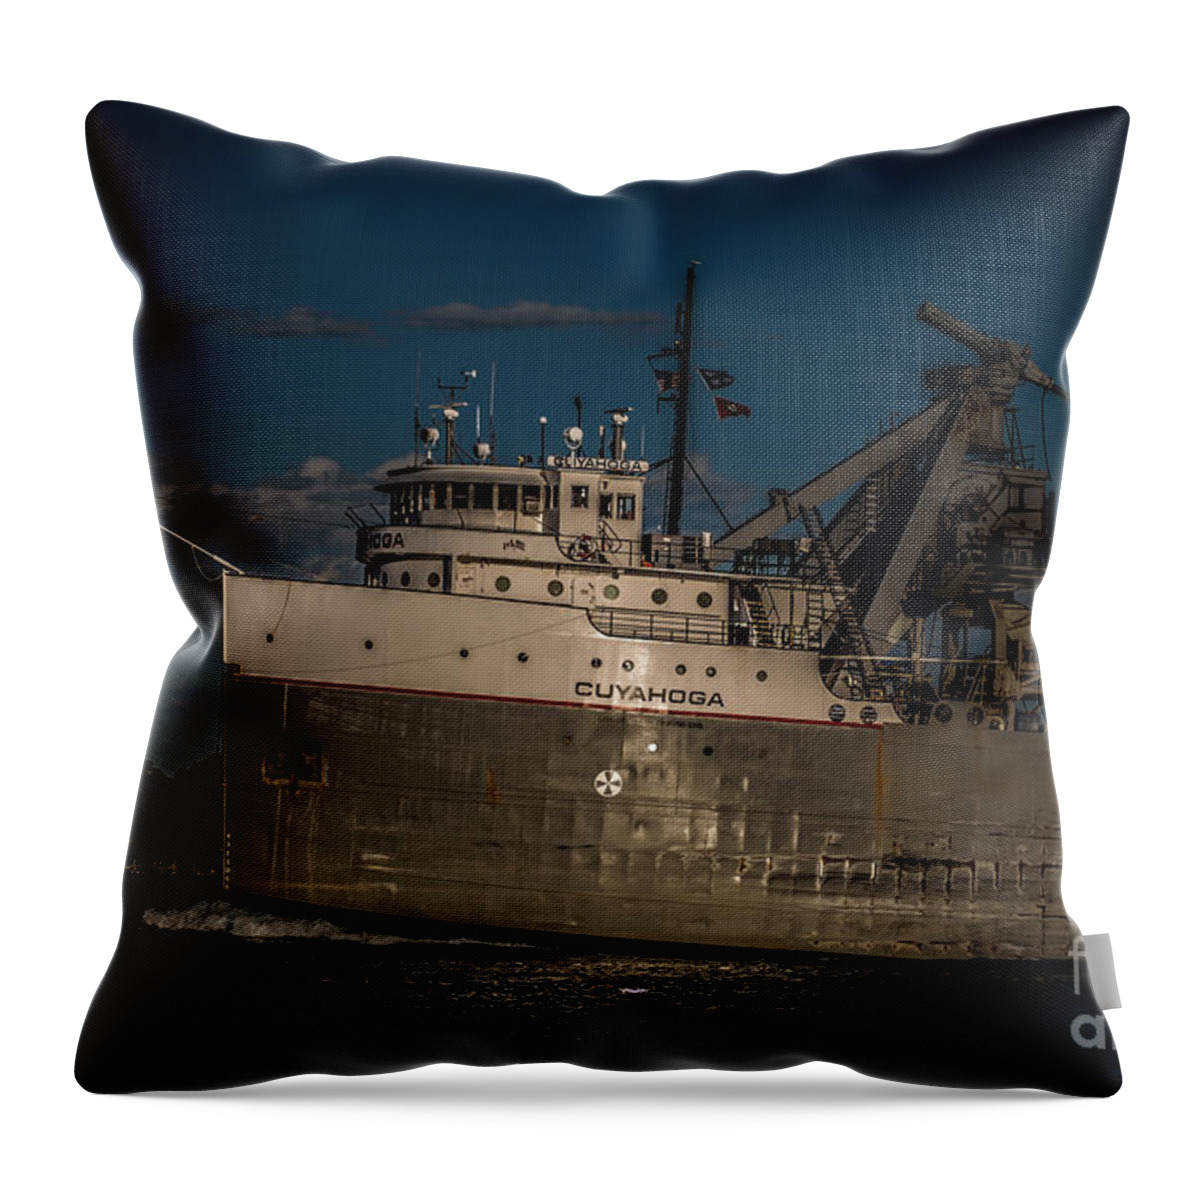 Ship Throw Pillow featuring the photograph Cuyahoga by Ronald Grogan